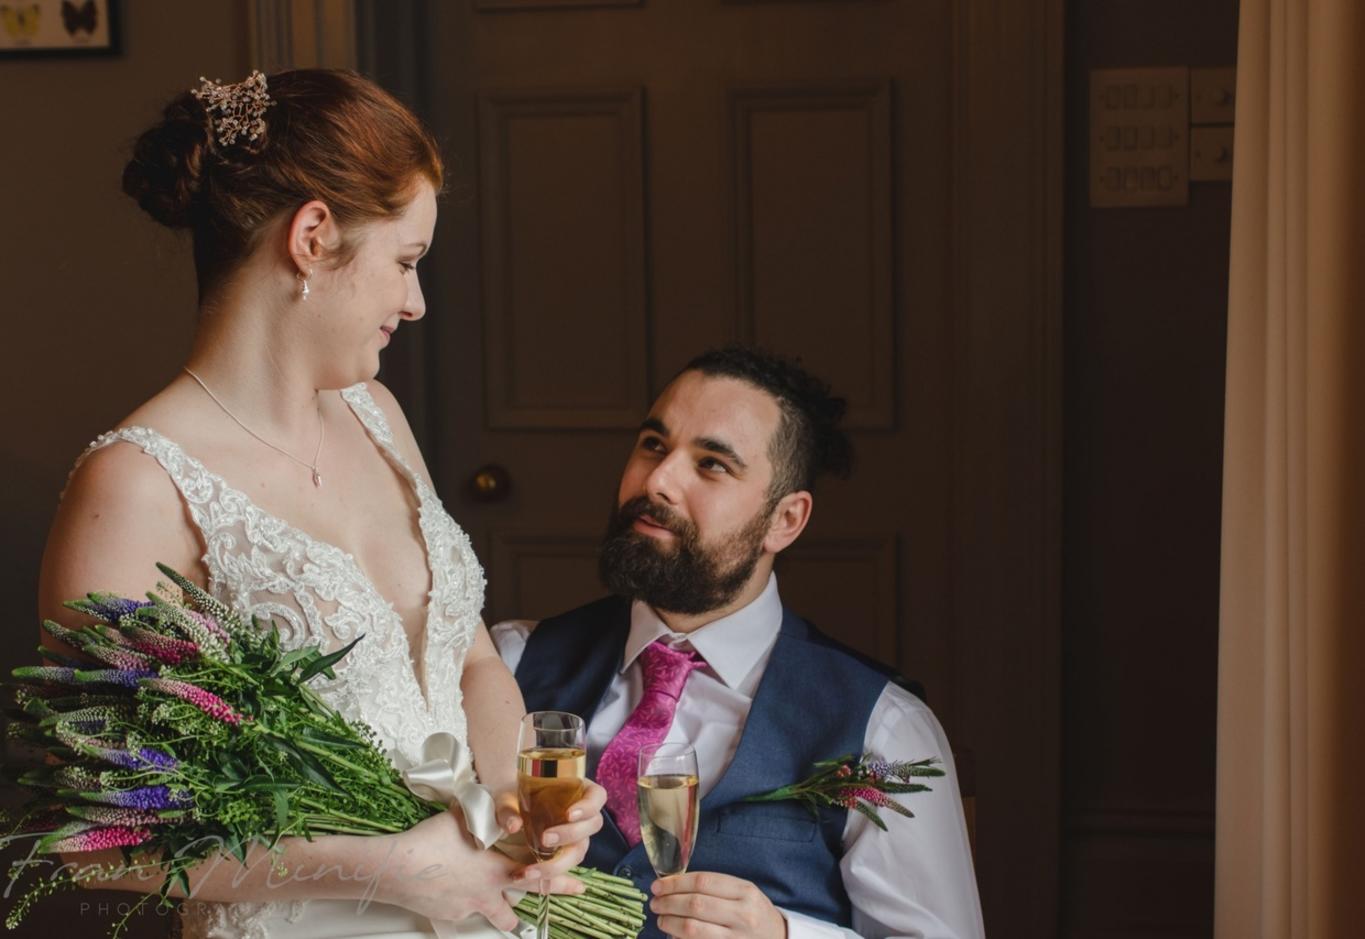 The Grange Hotel classic English bride and groom cerise tie